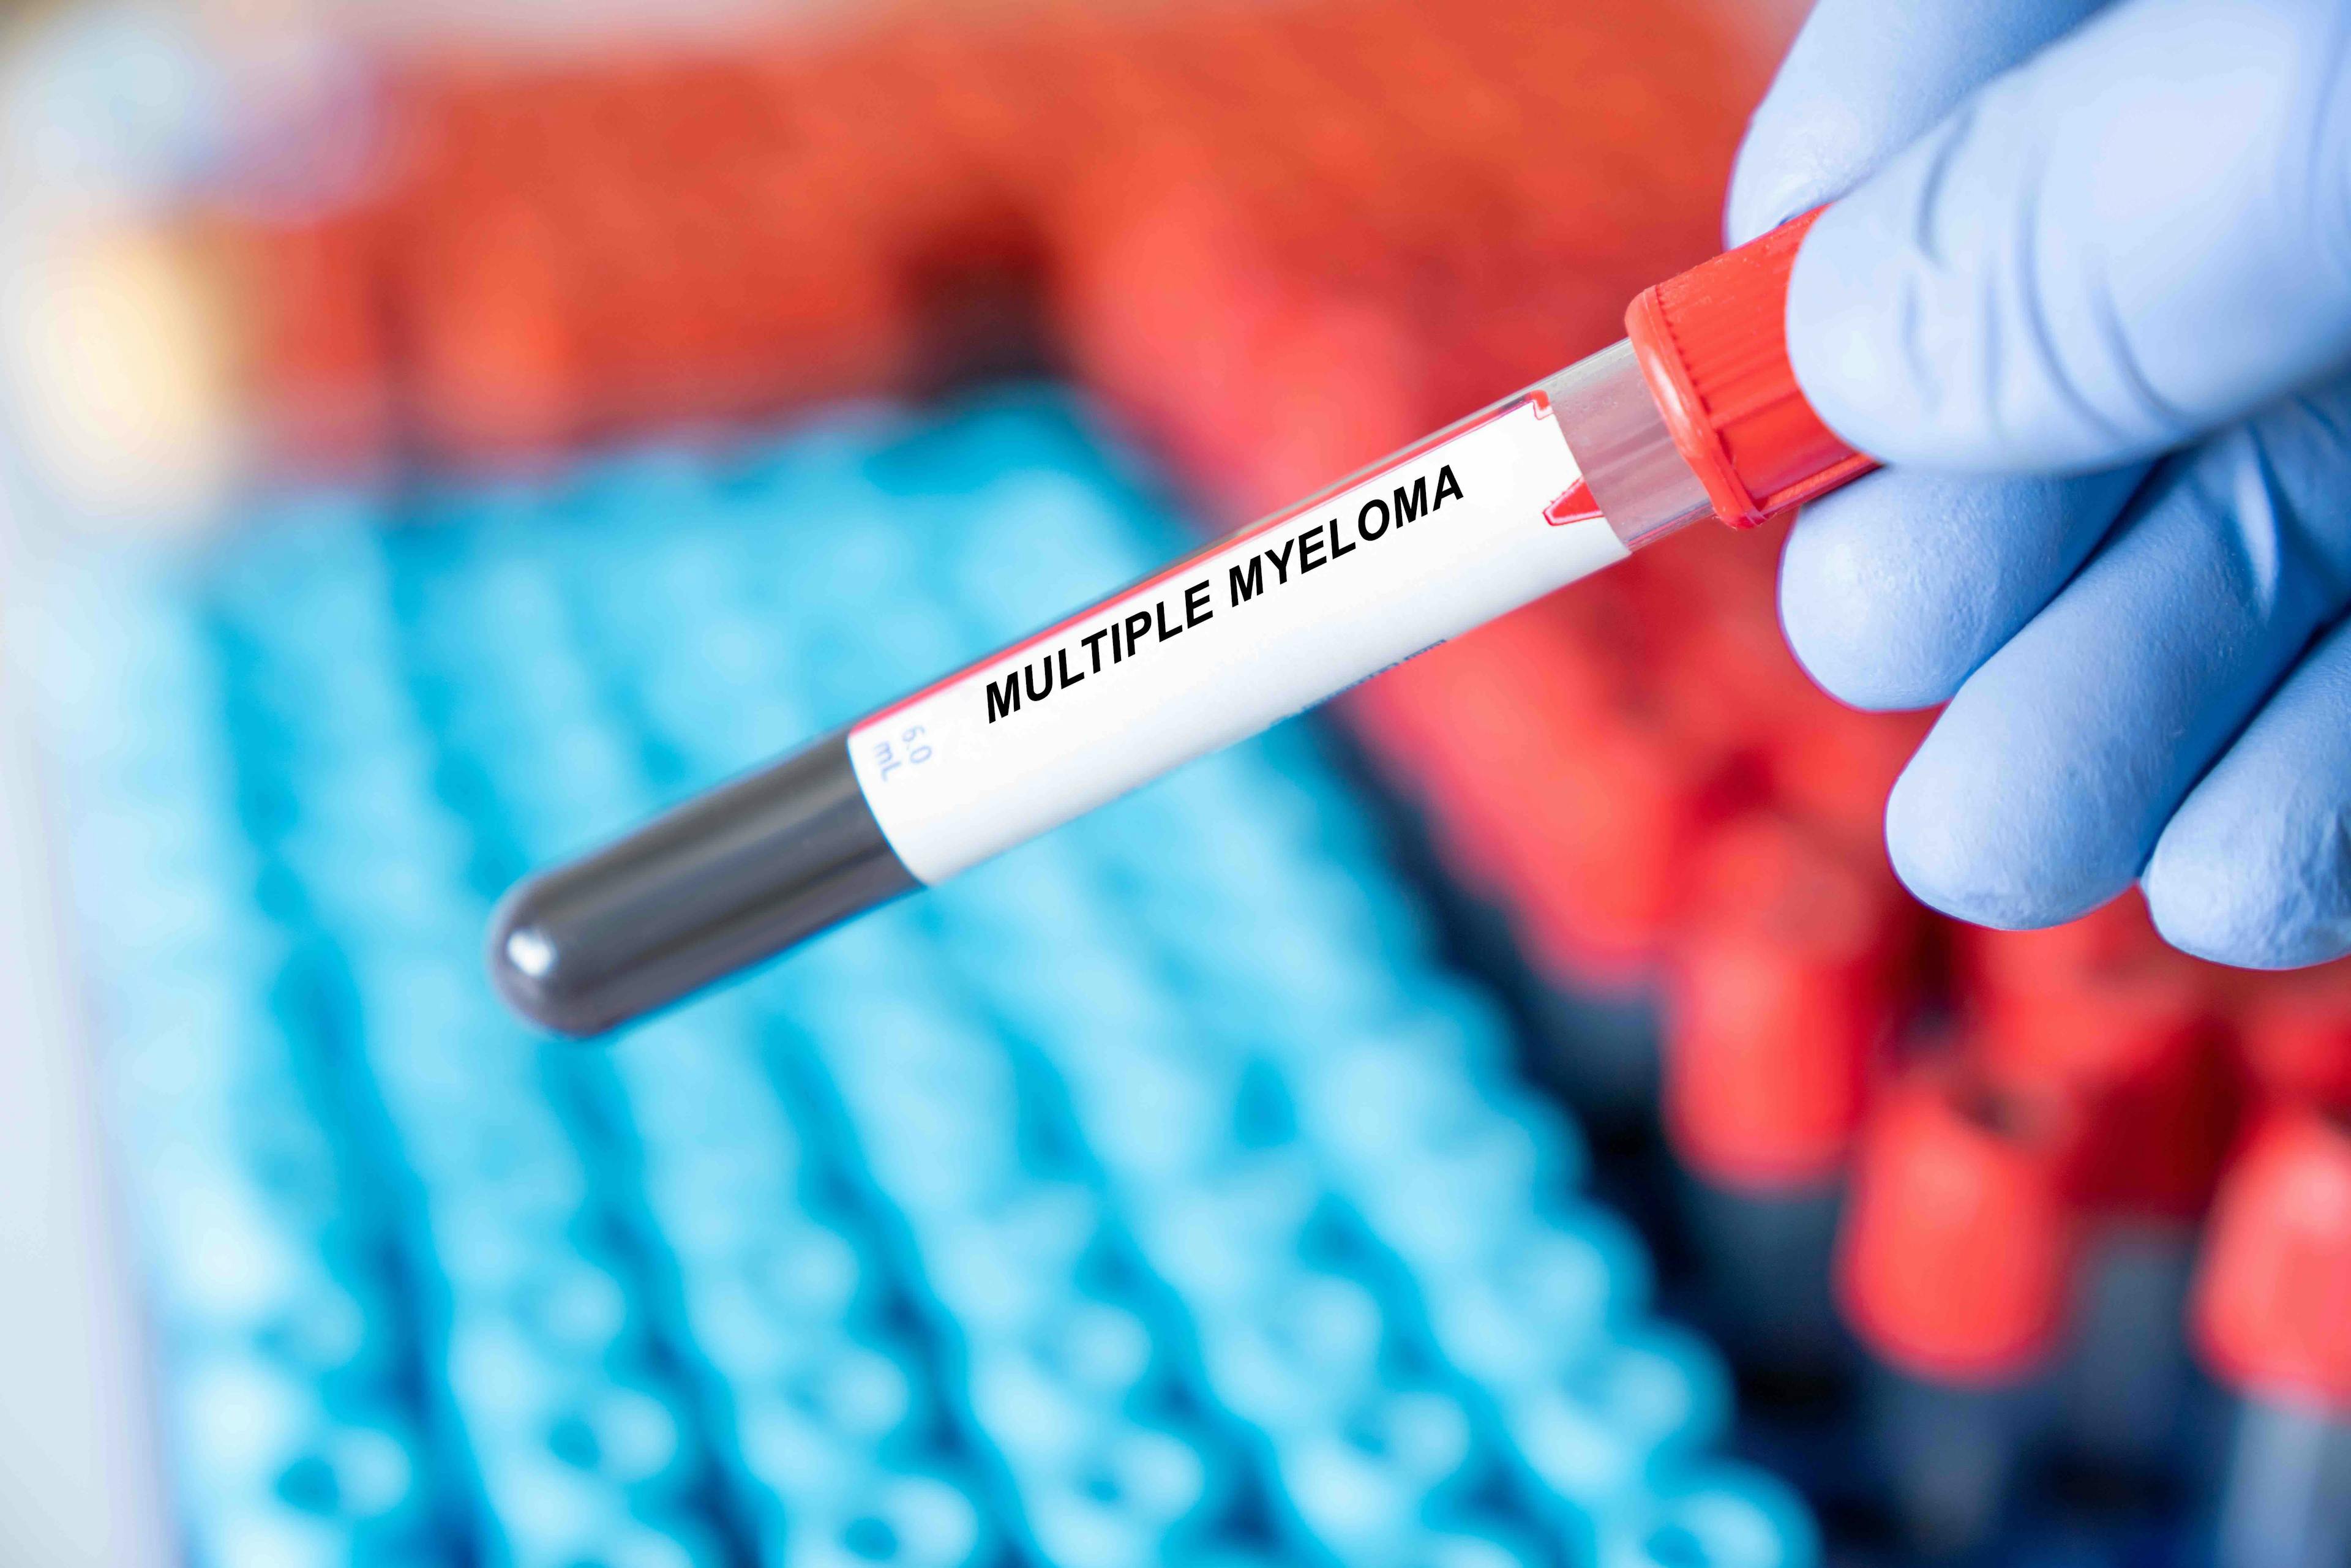 Multiple myeloma blood testing | Image credit: luchschenF - stock.adobe.com